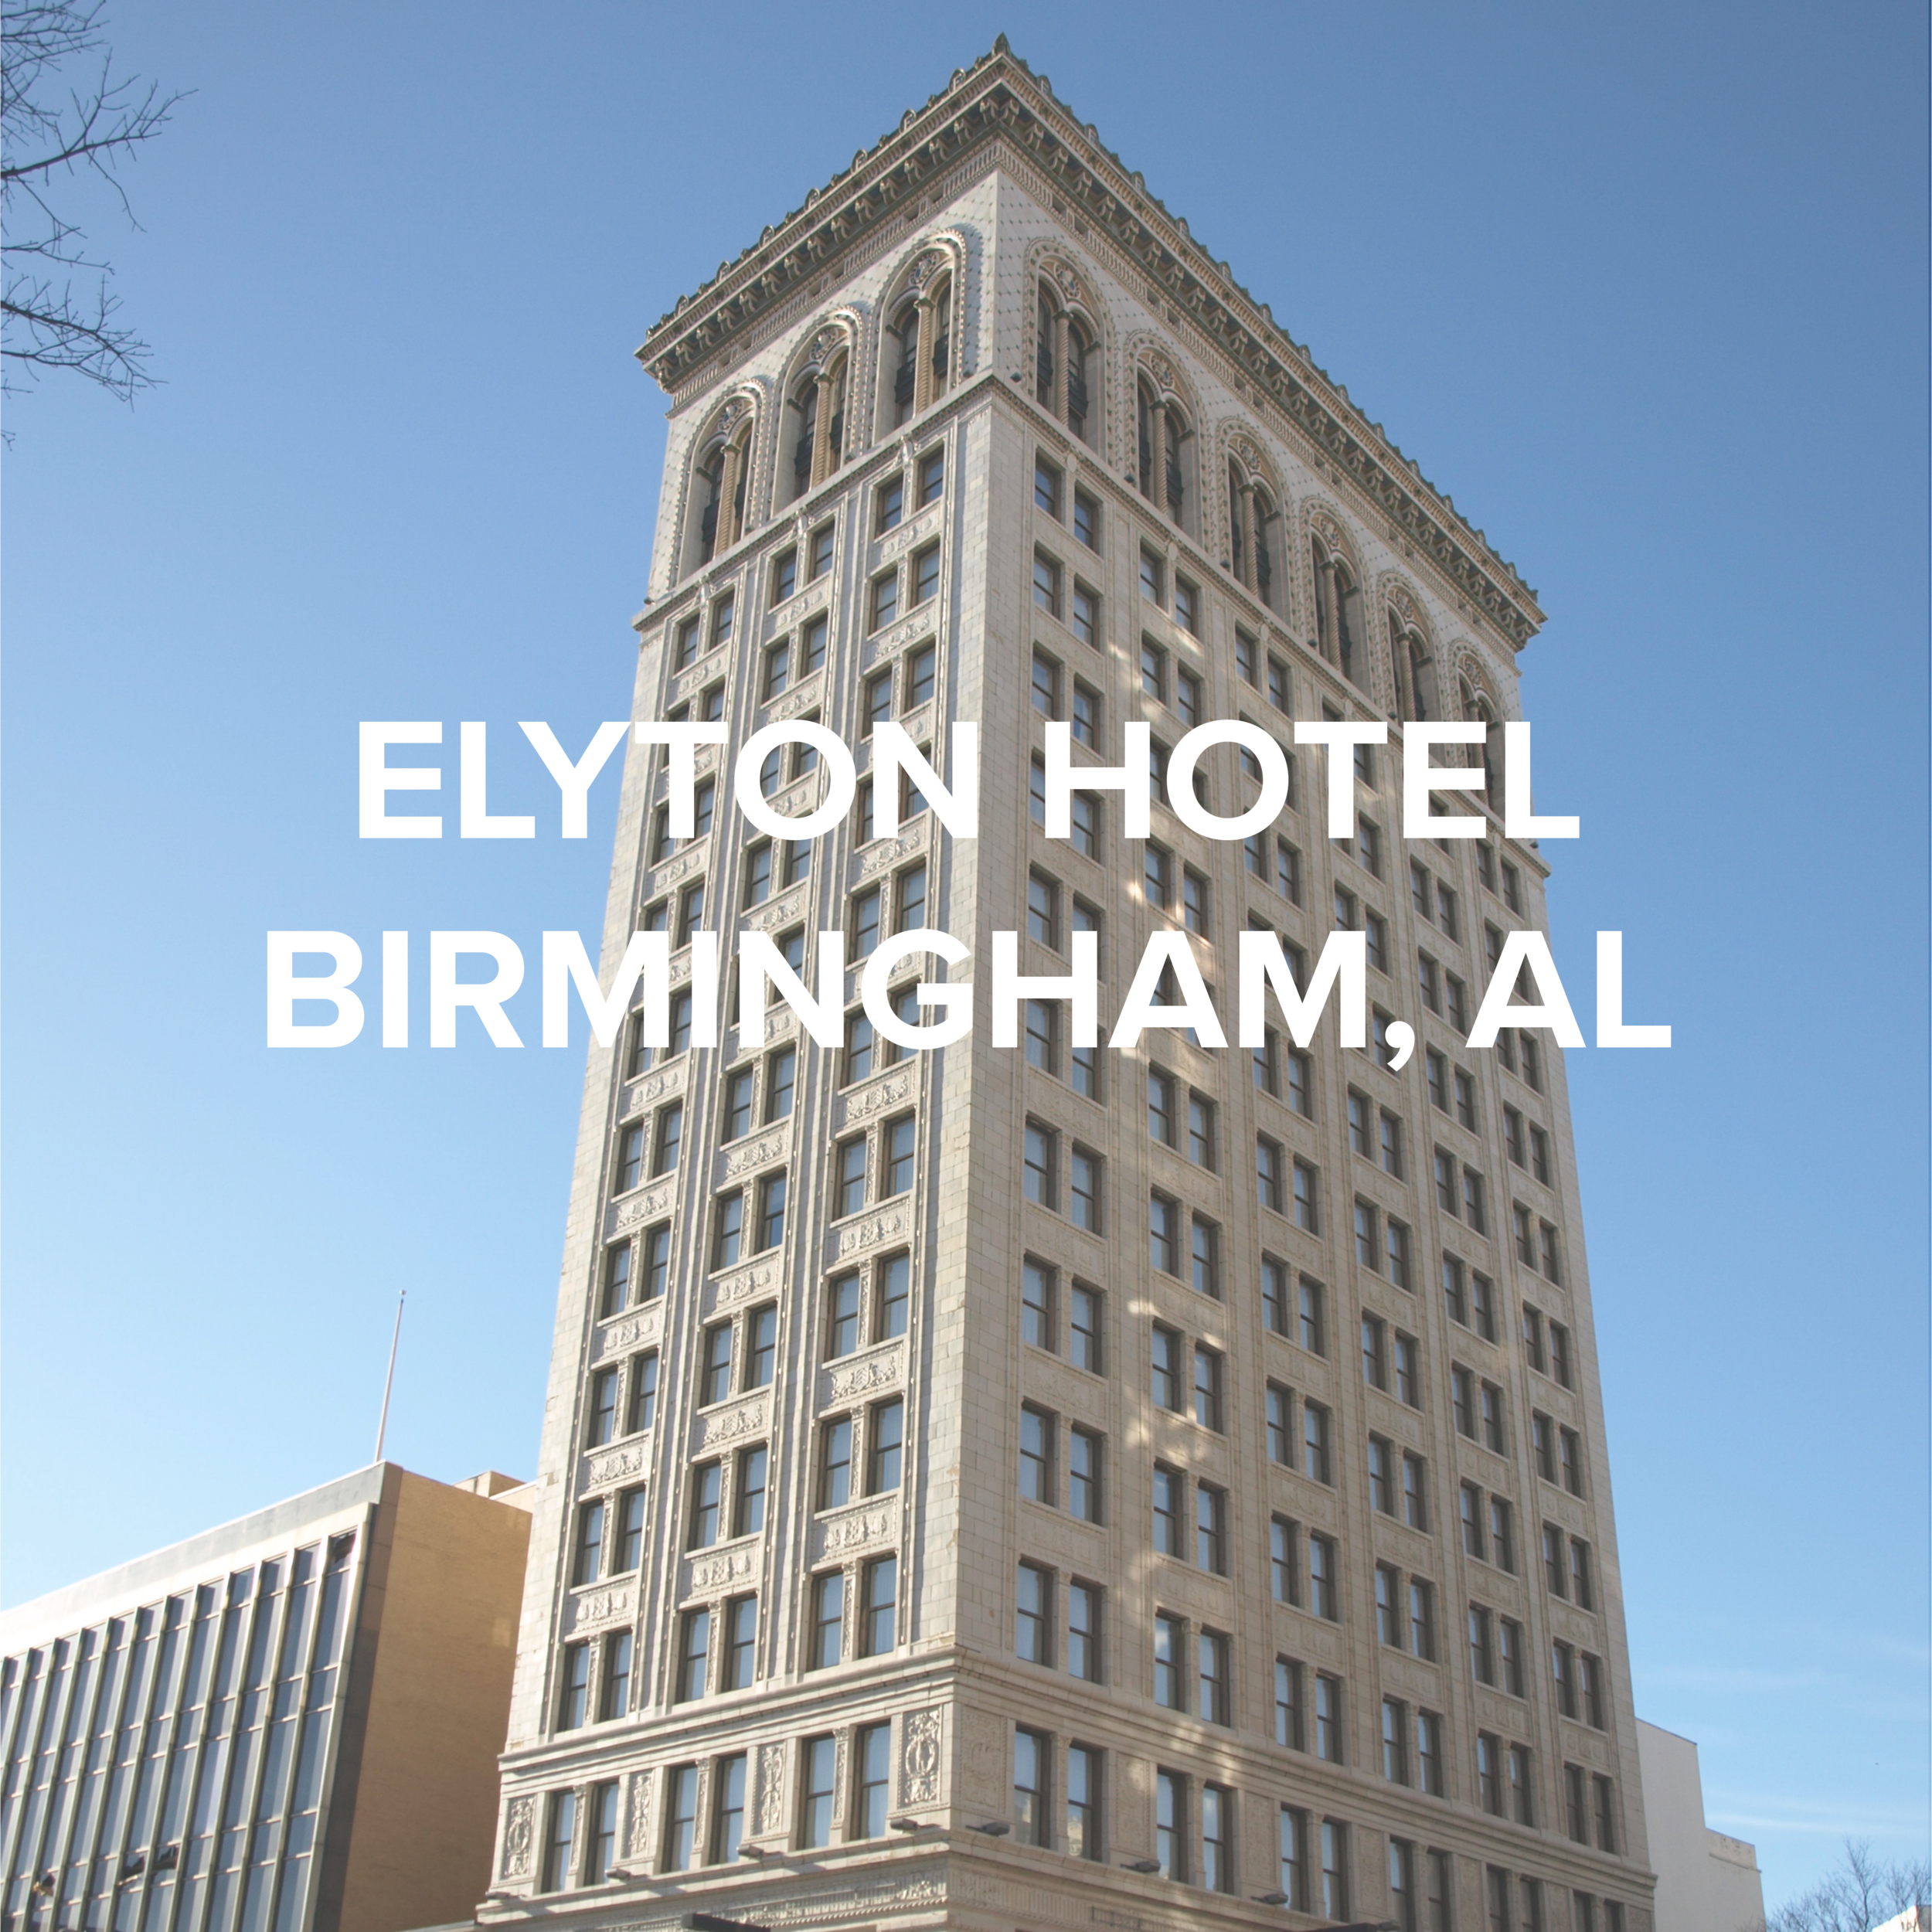 ELYTON HOTEL | BIRMINGHAM, AL